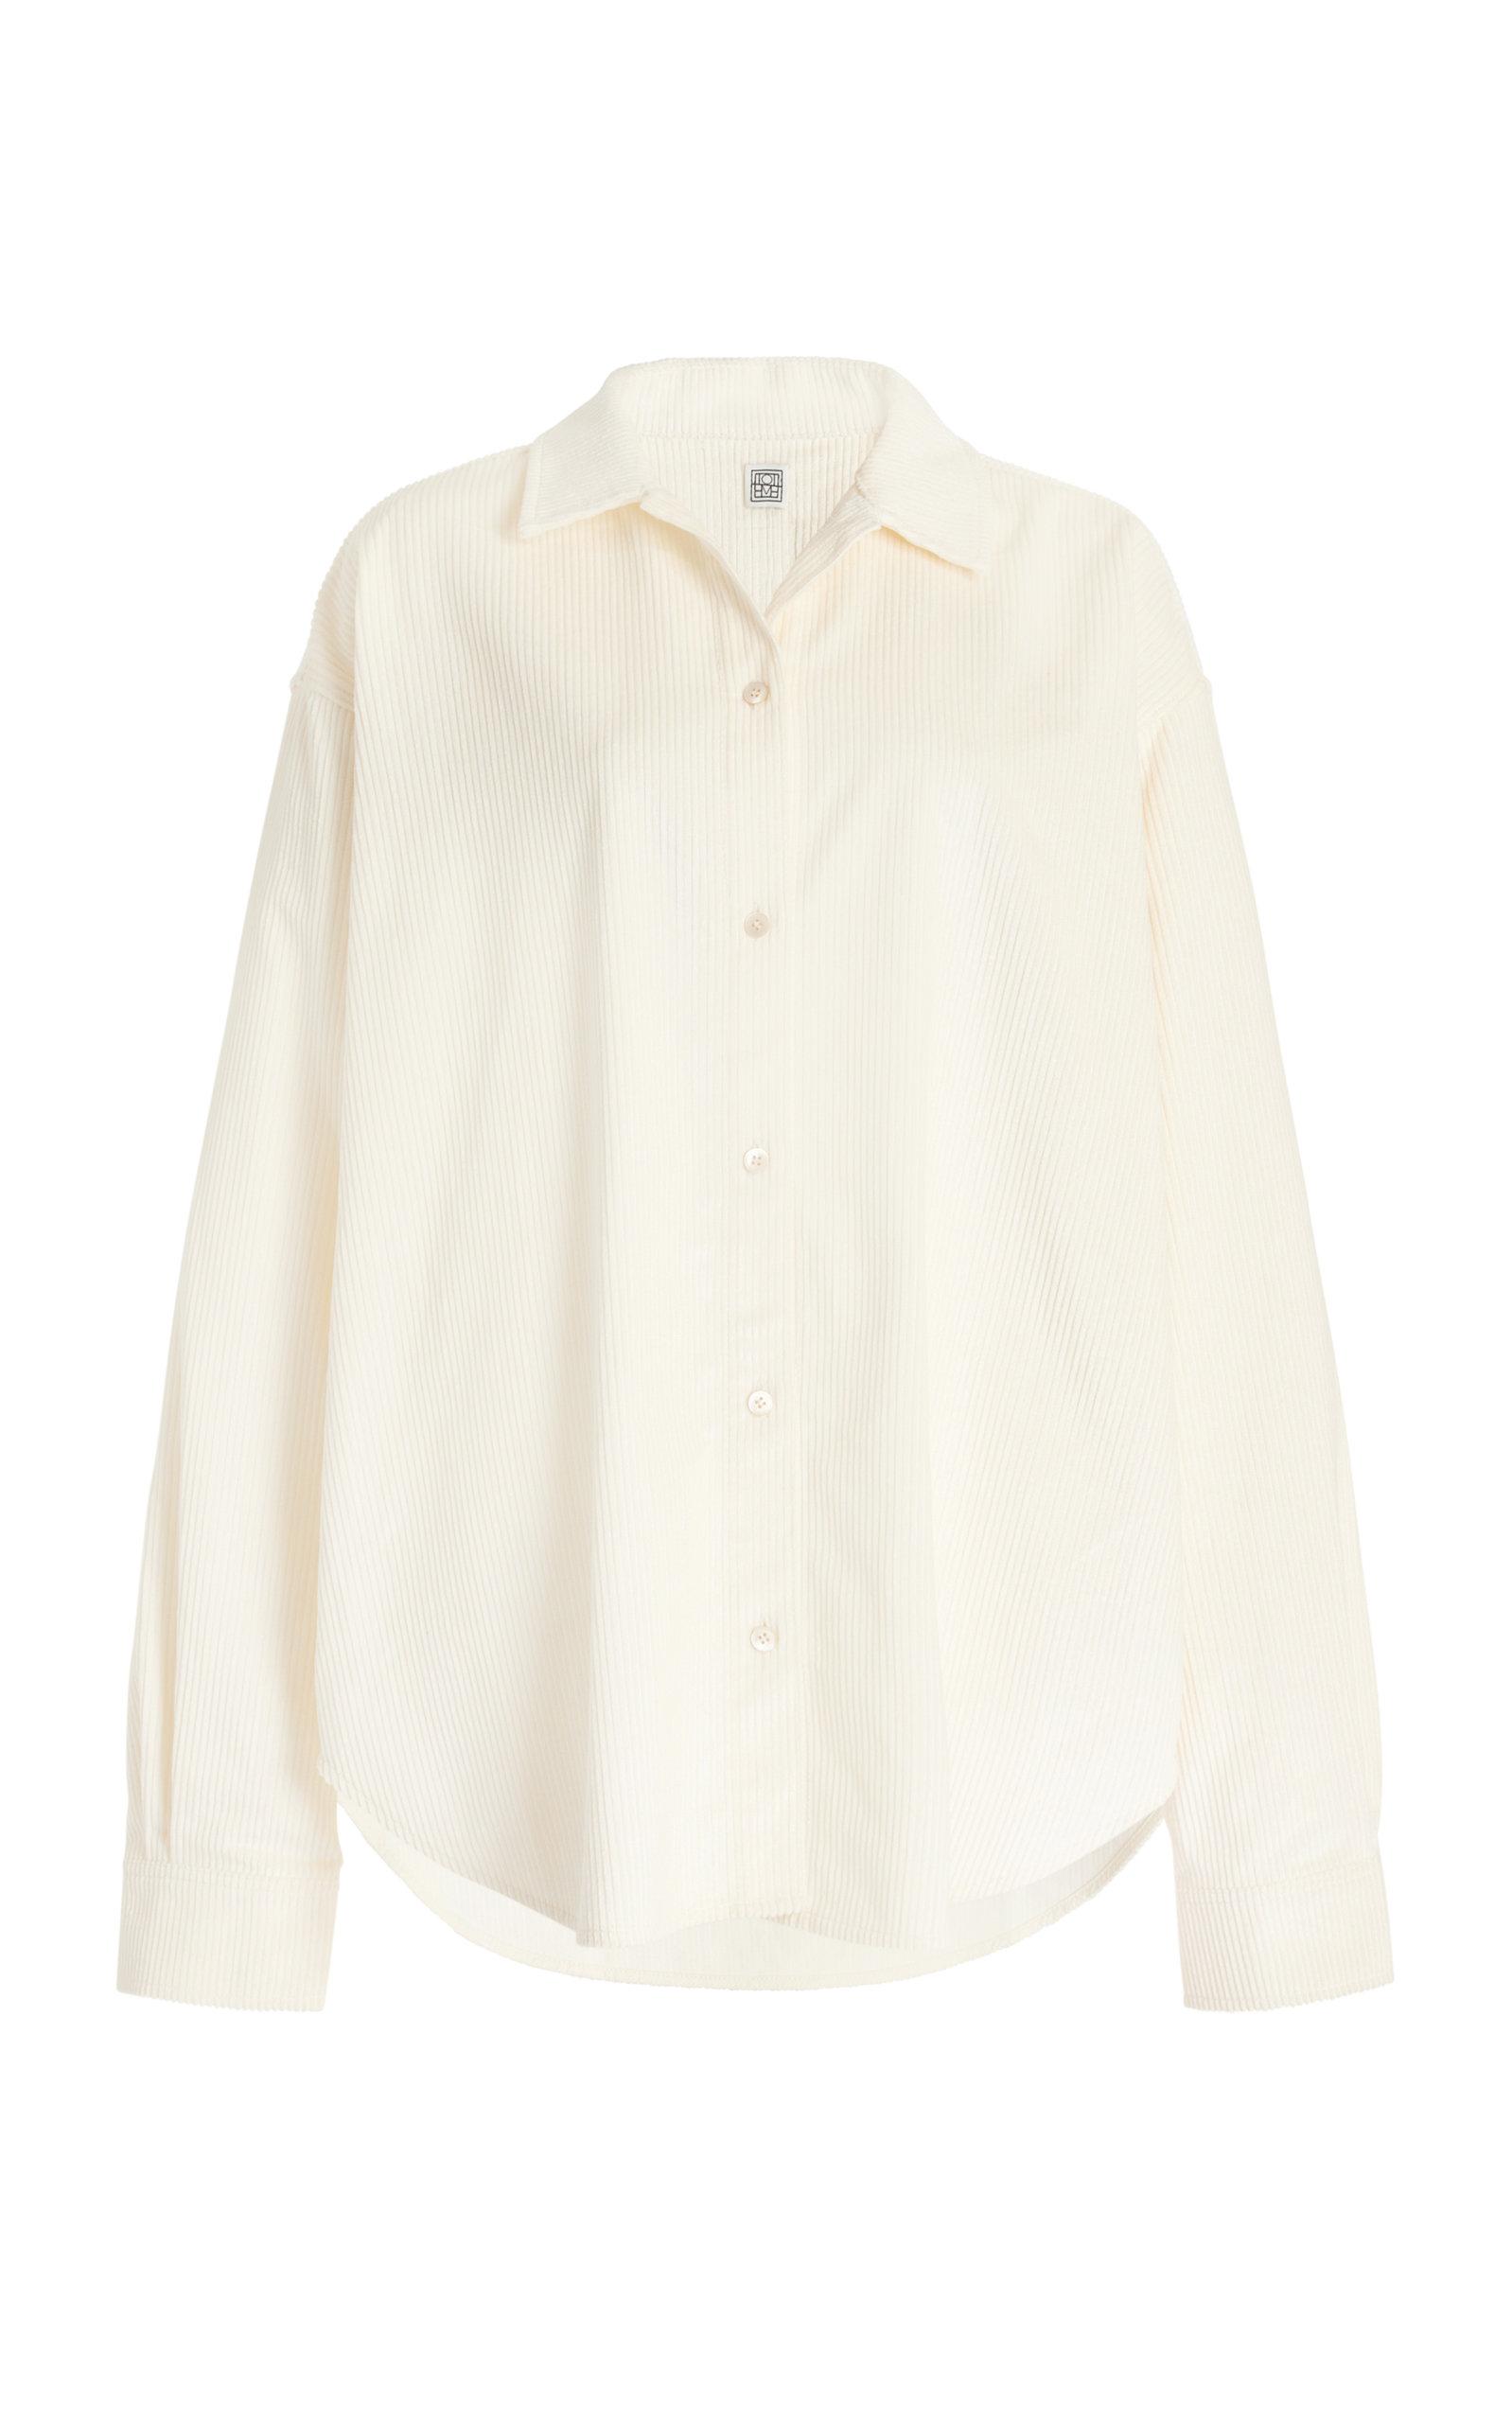 Totême Corduroy Shirt in White | Lyst